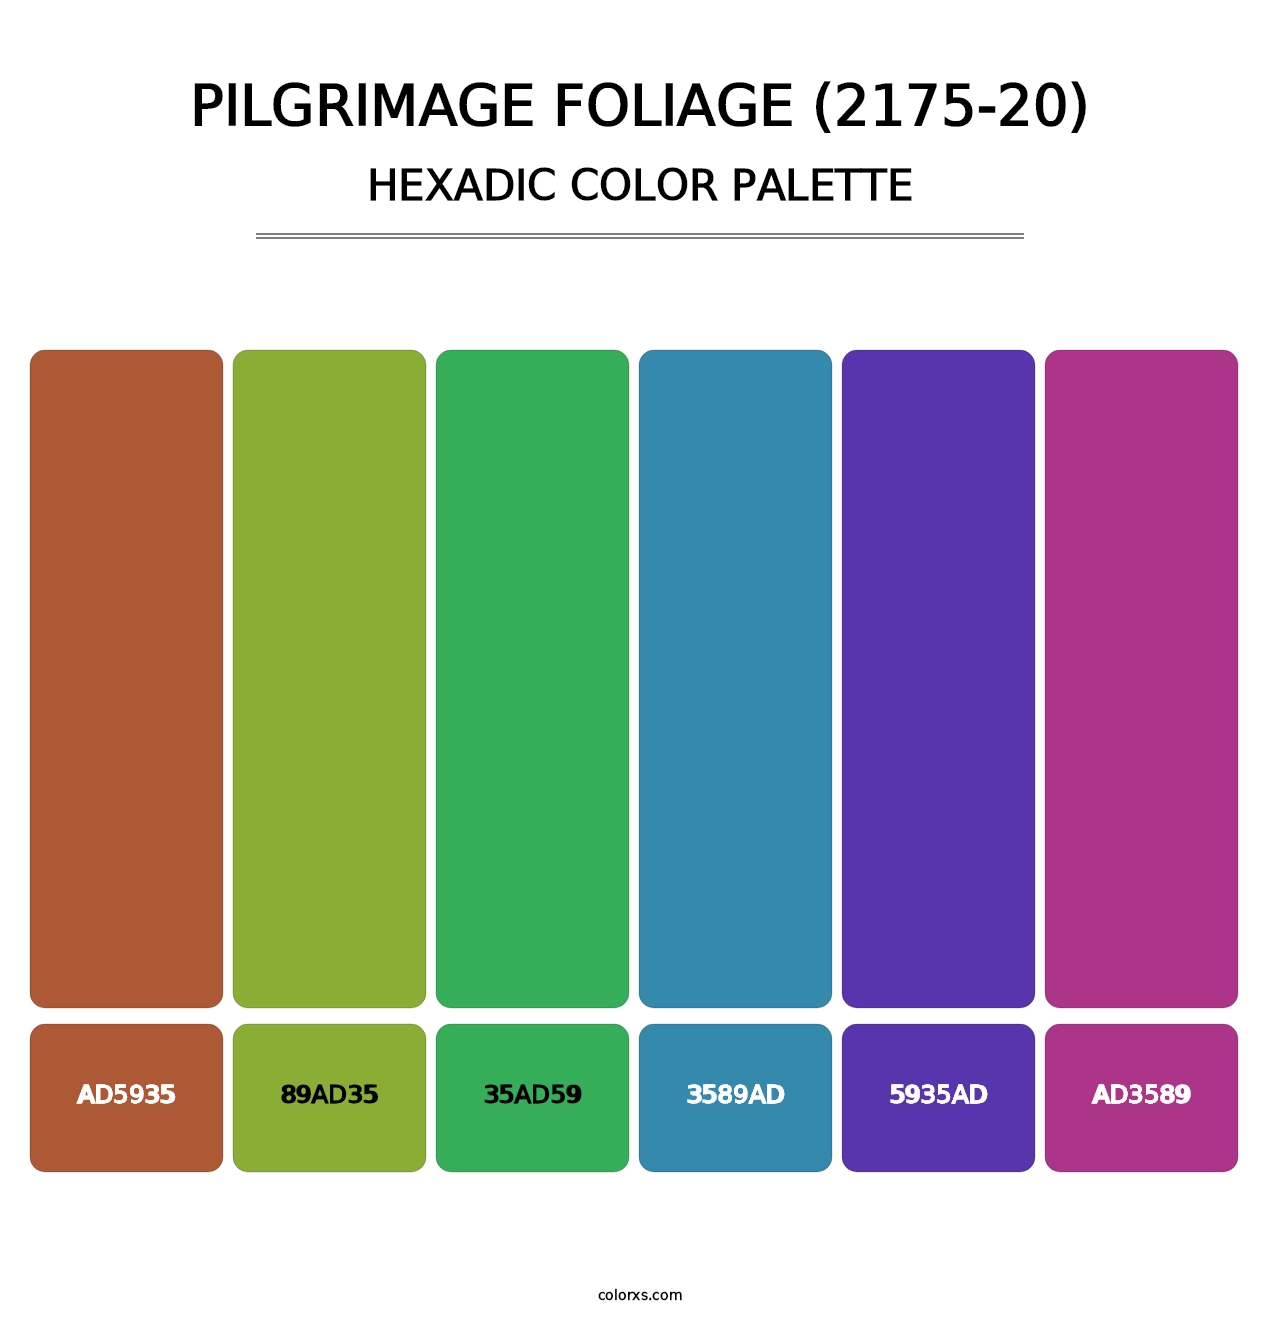 Pilgrimage Foliage (2175-20) - Hexadic Color Palette